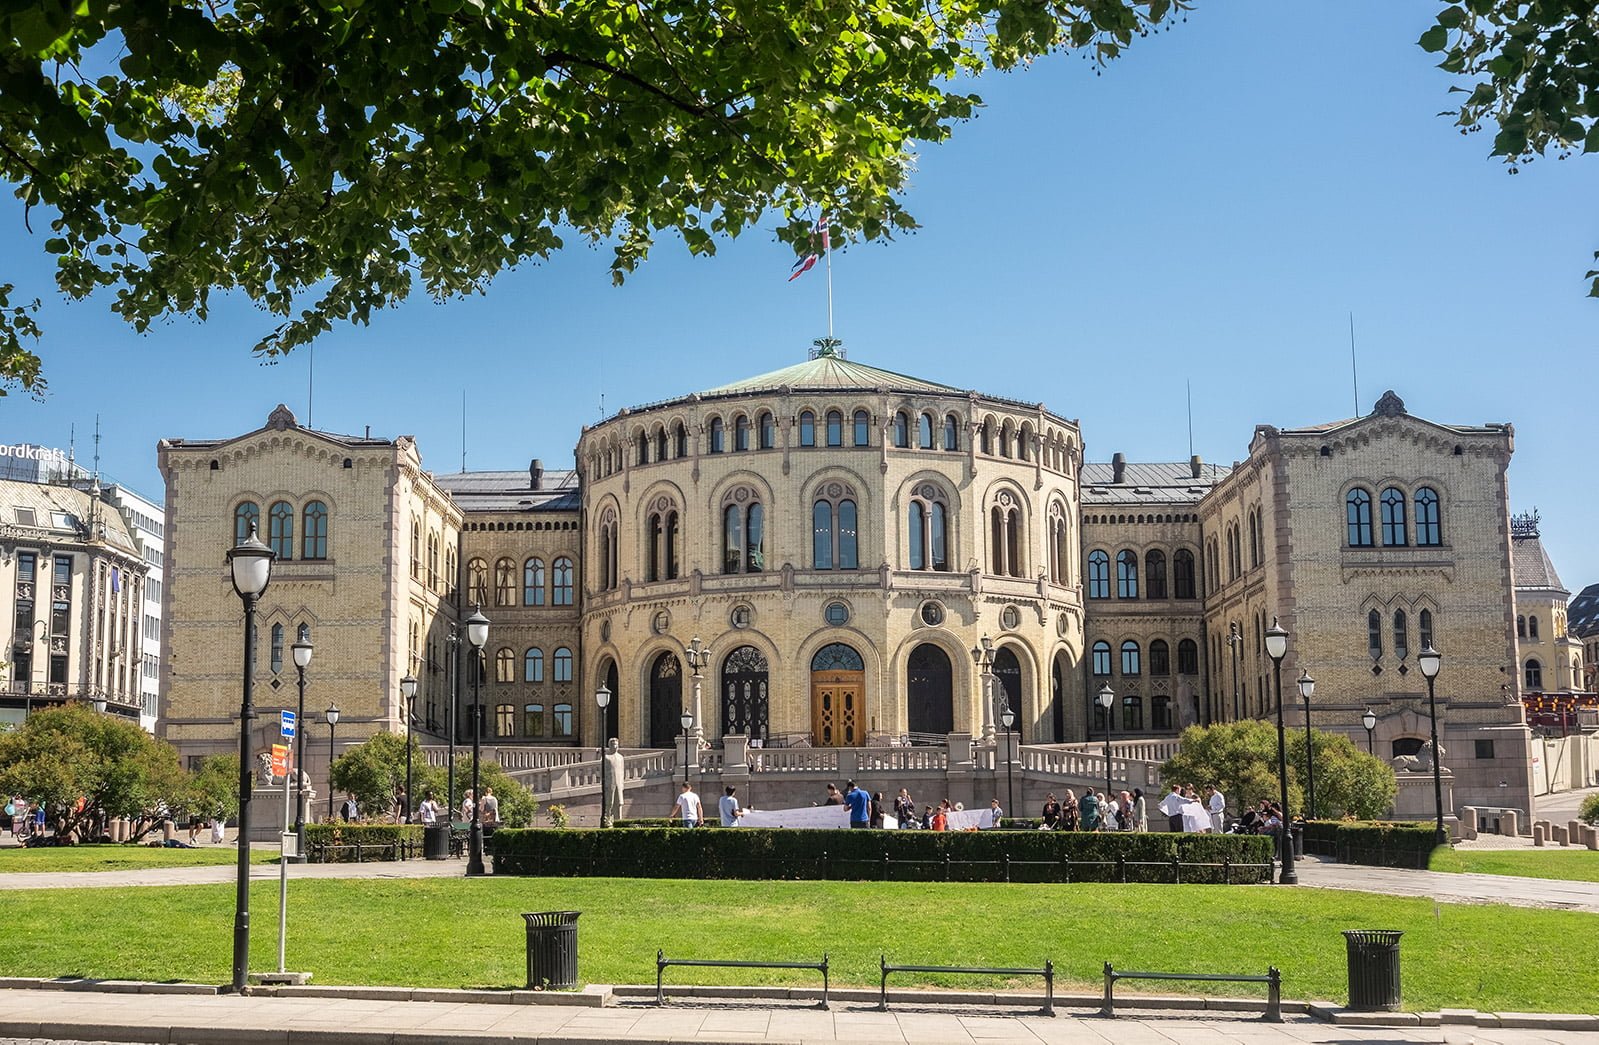 The Norwegian Parliament building in Oslo, Norway